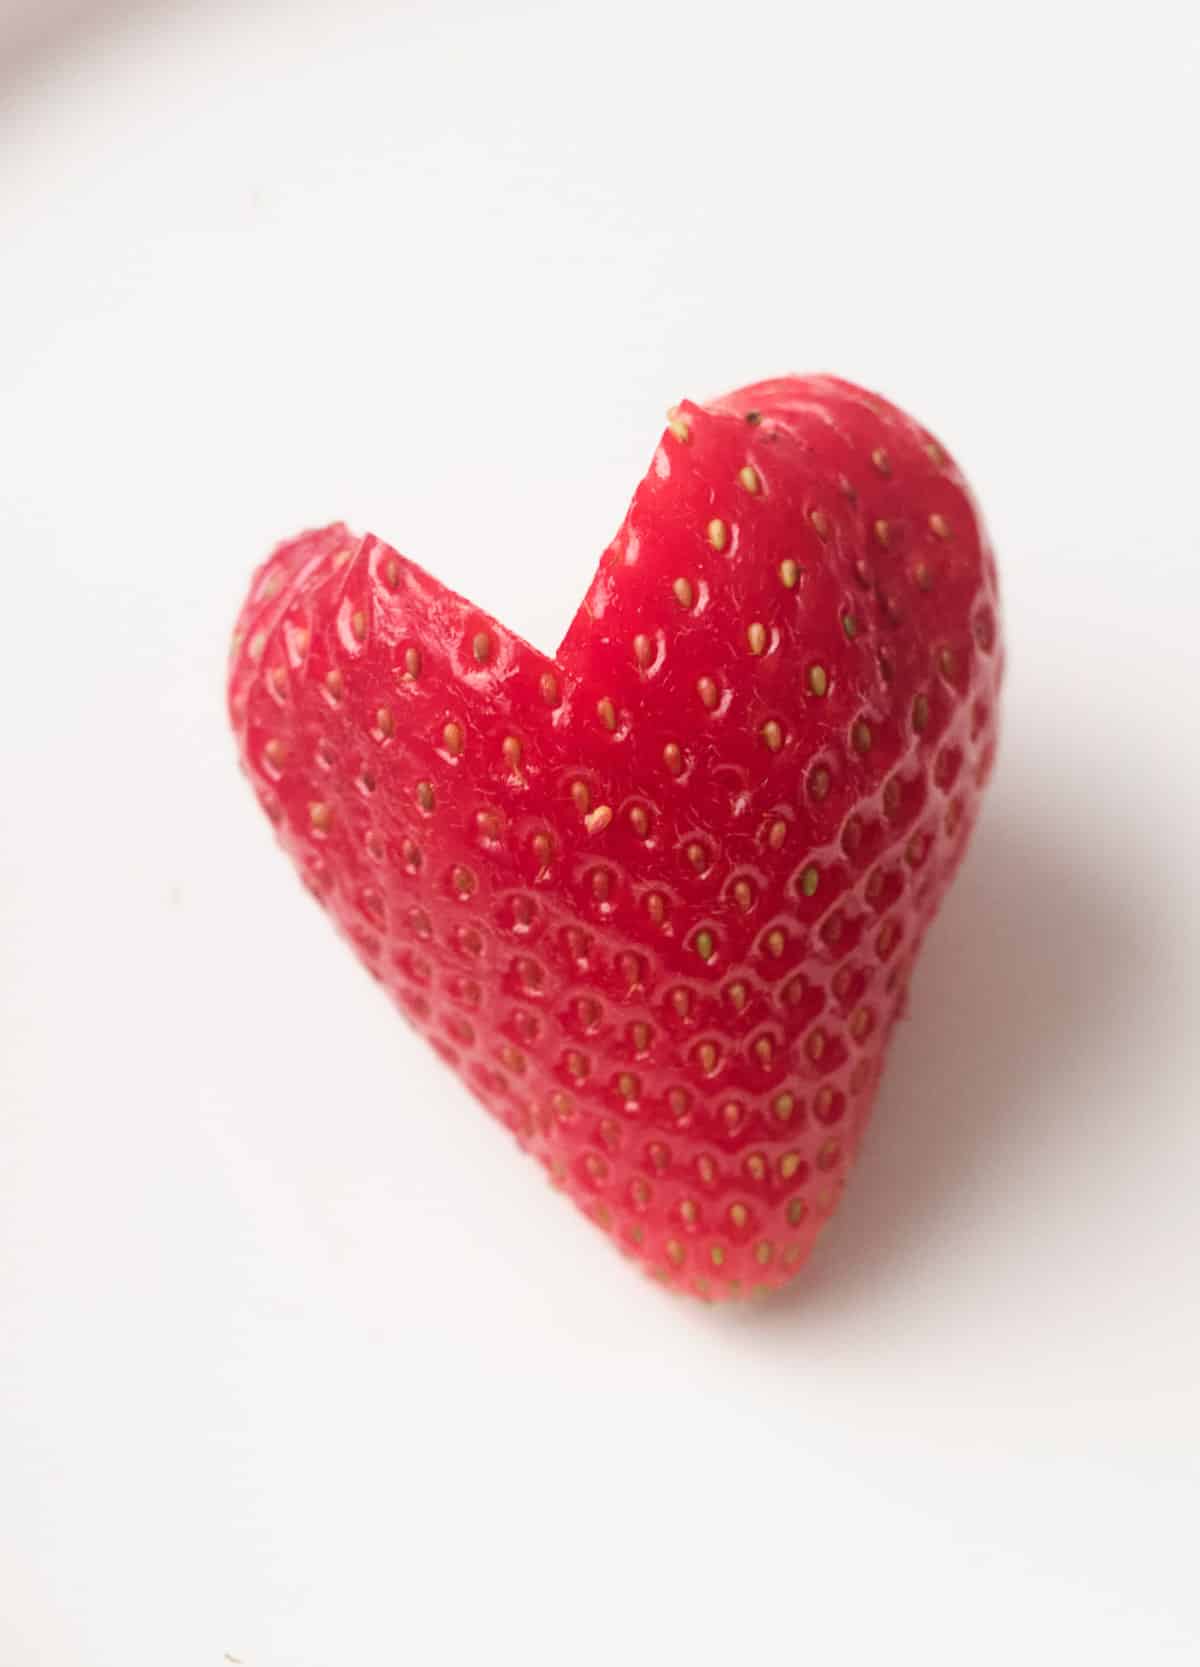 Single strawberry cut into a heart shape.